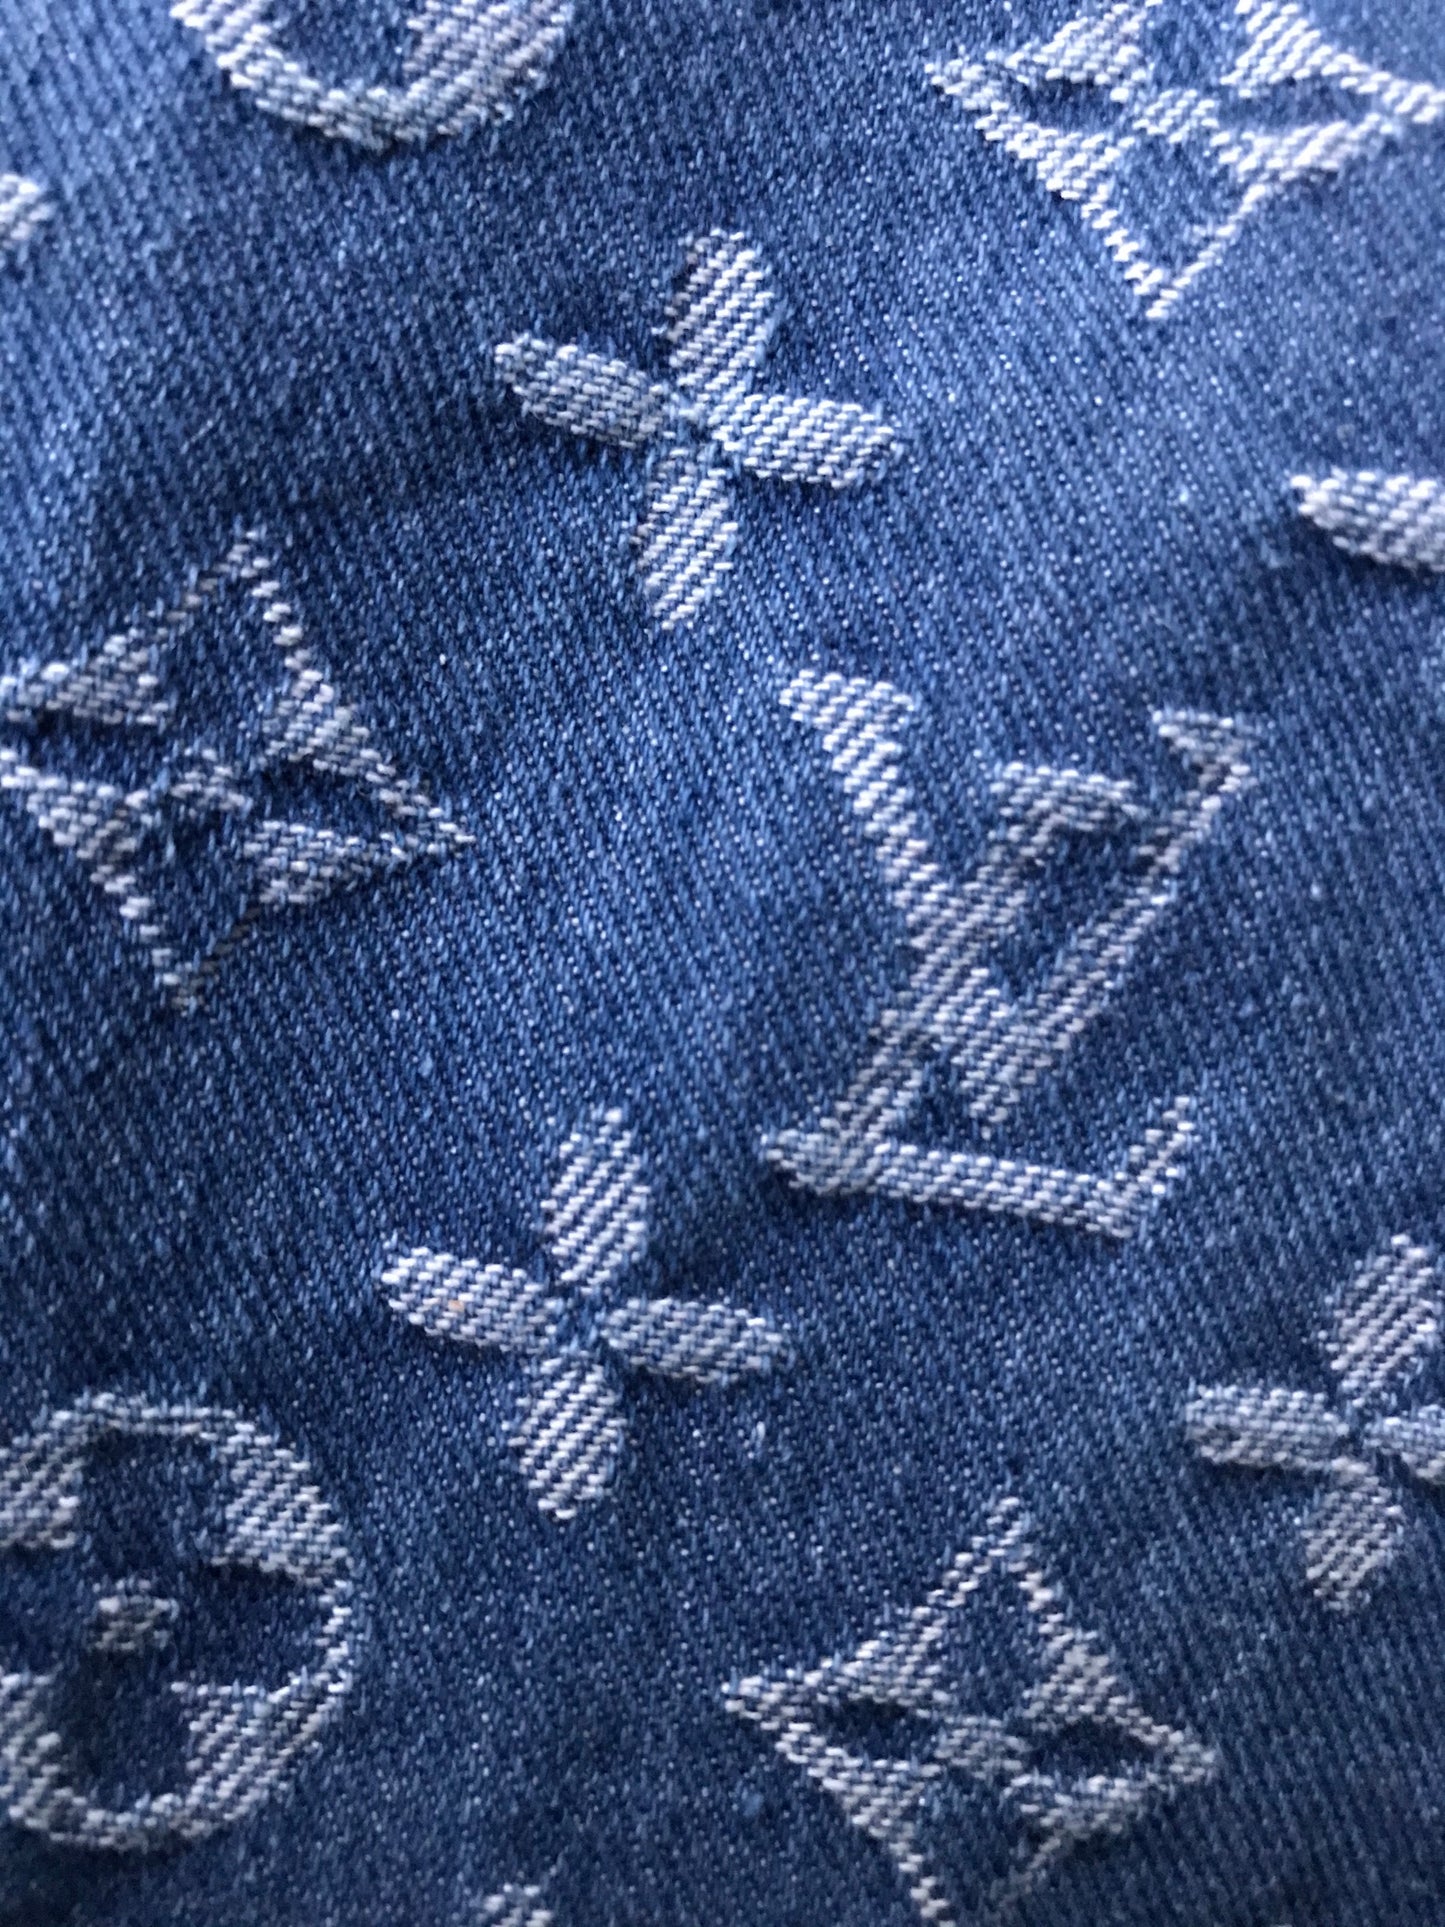 LV Denim Woven Fabric